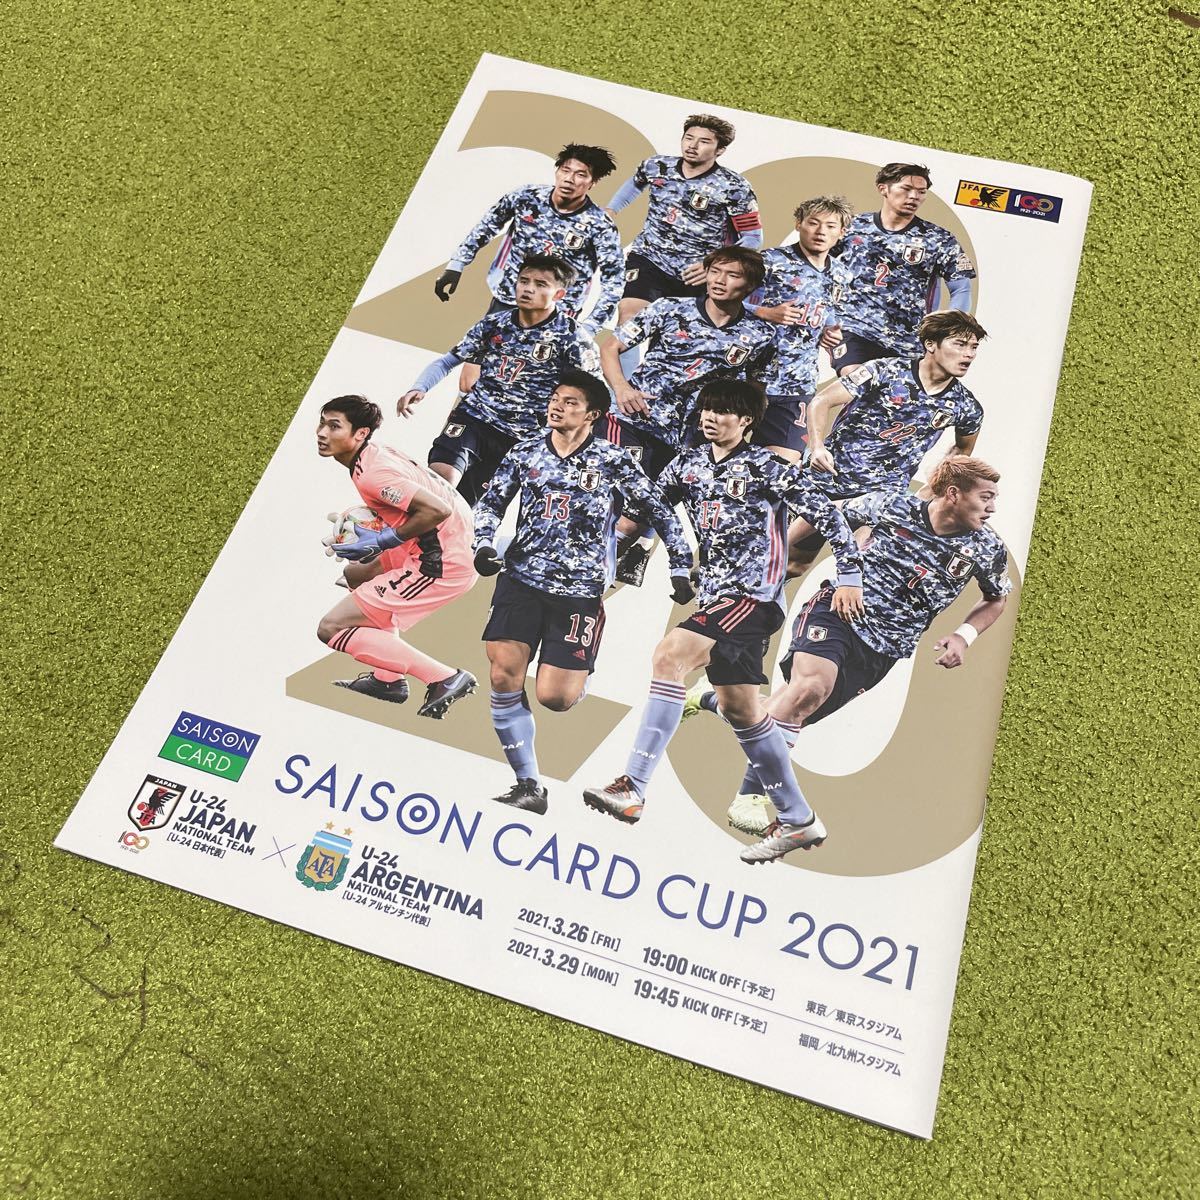 SAISON CARD CUP 2021 U24 Япония представитель ×U24 Argentina представитель program 